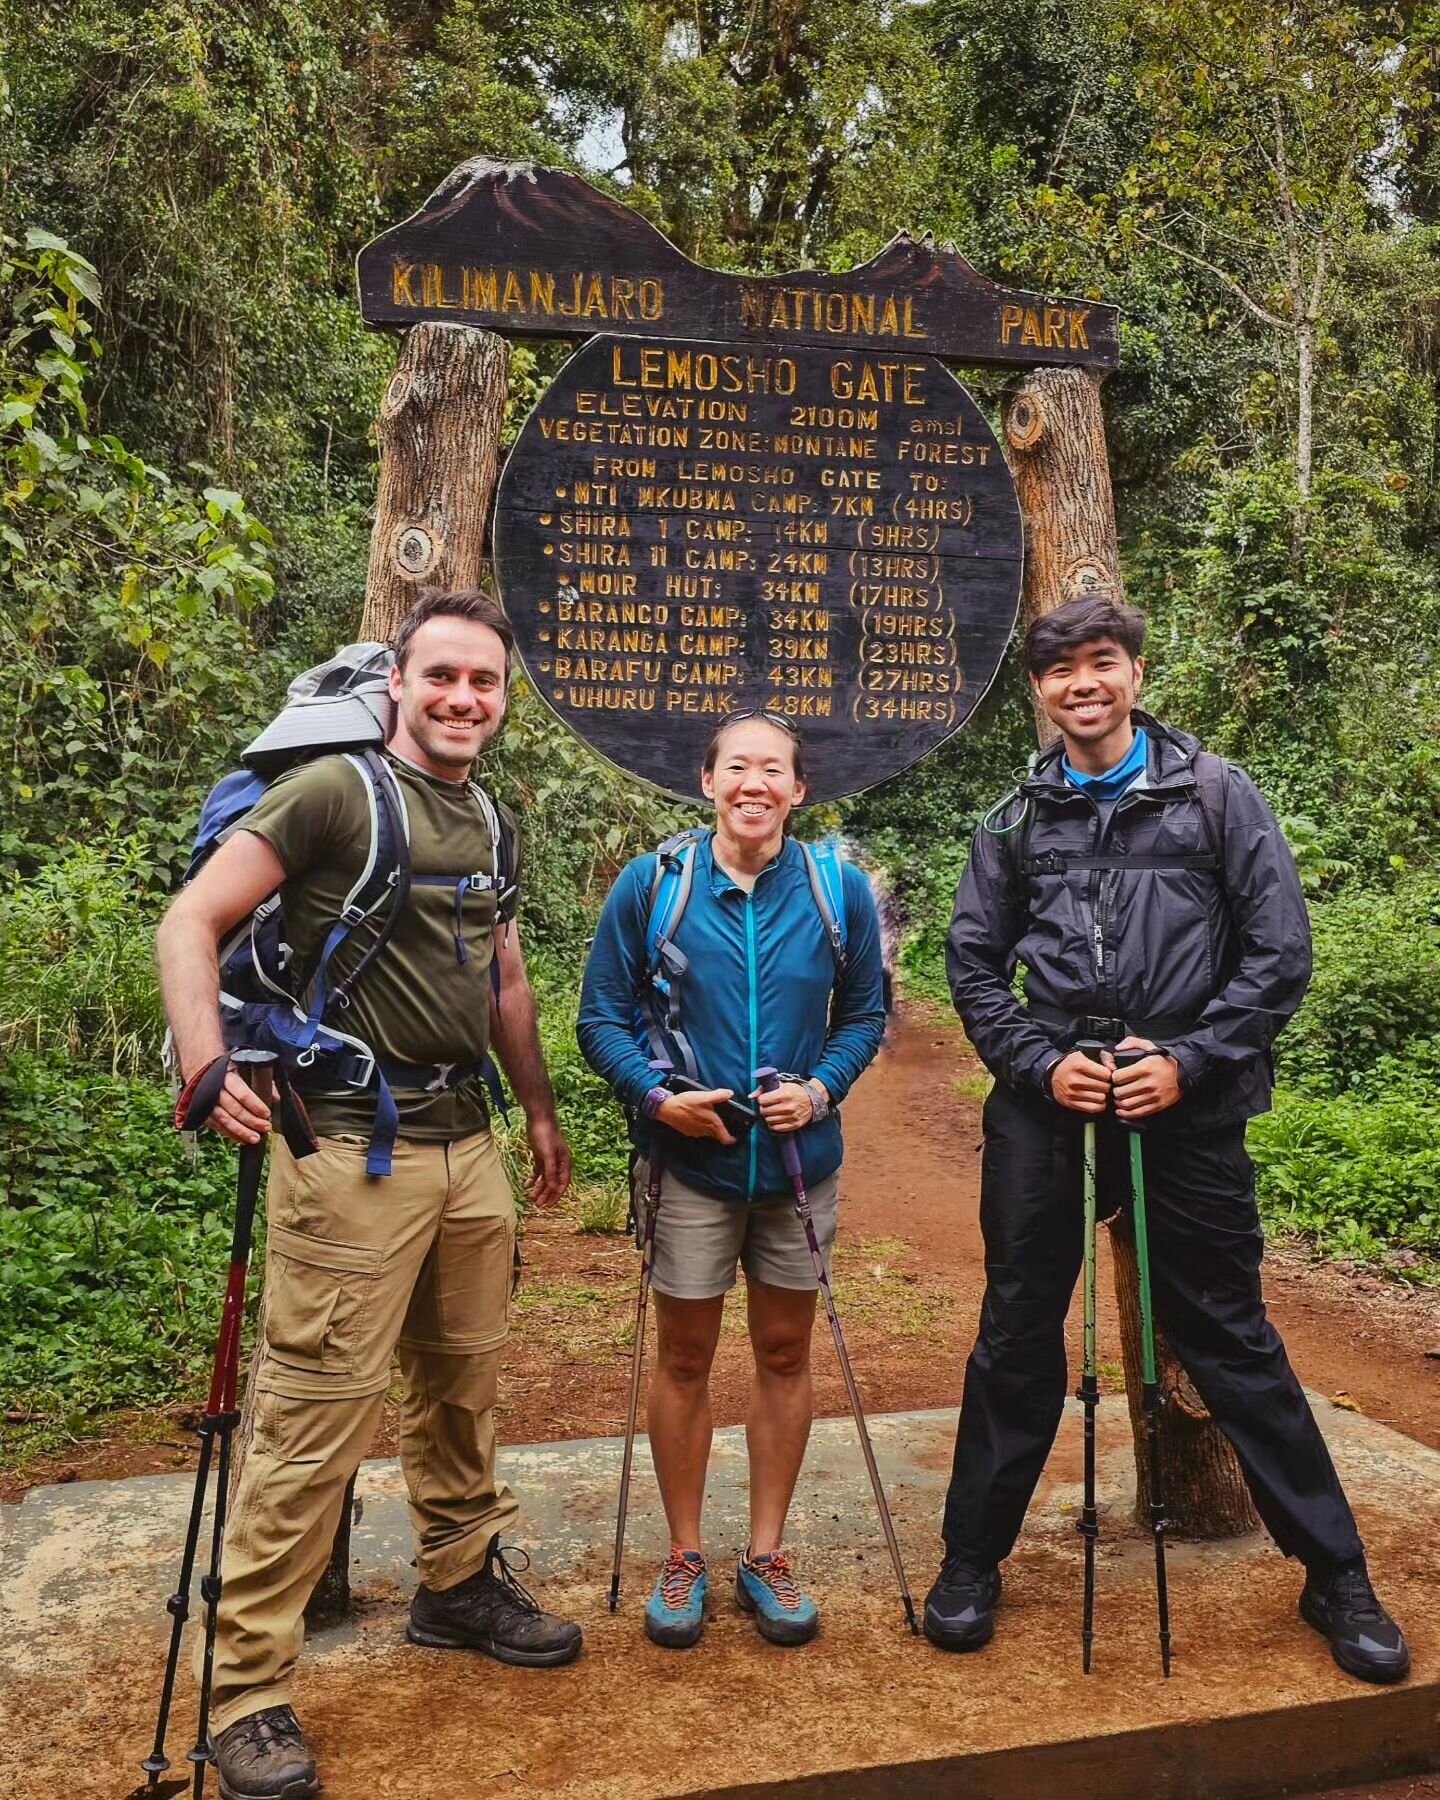 🏔 At the start of the Kilimanjaro trek! Taking the Lemosho 8-day route.

#kilimanjaro #tanzania #trekking #hiking #africa